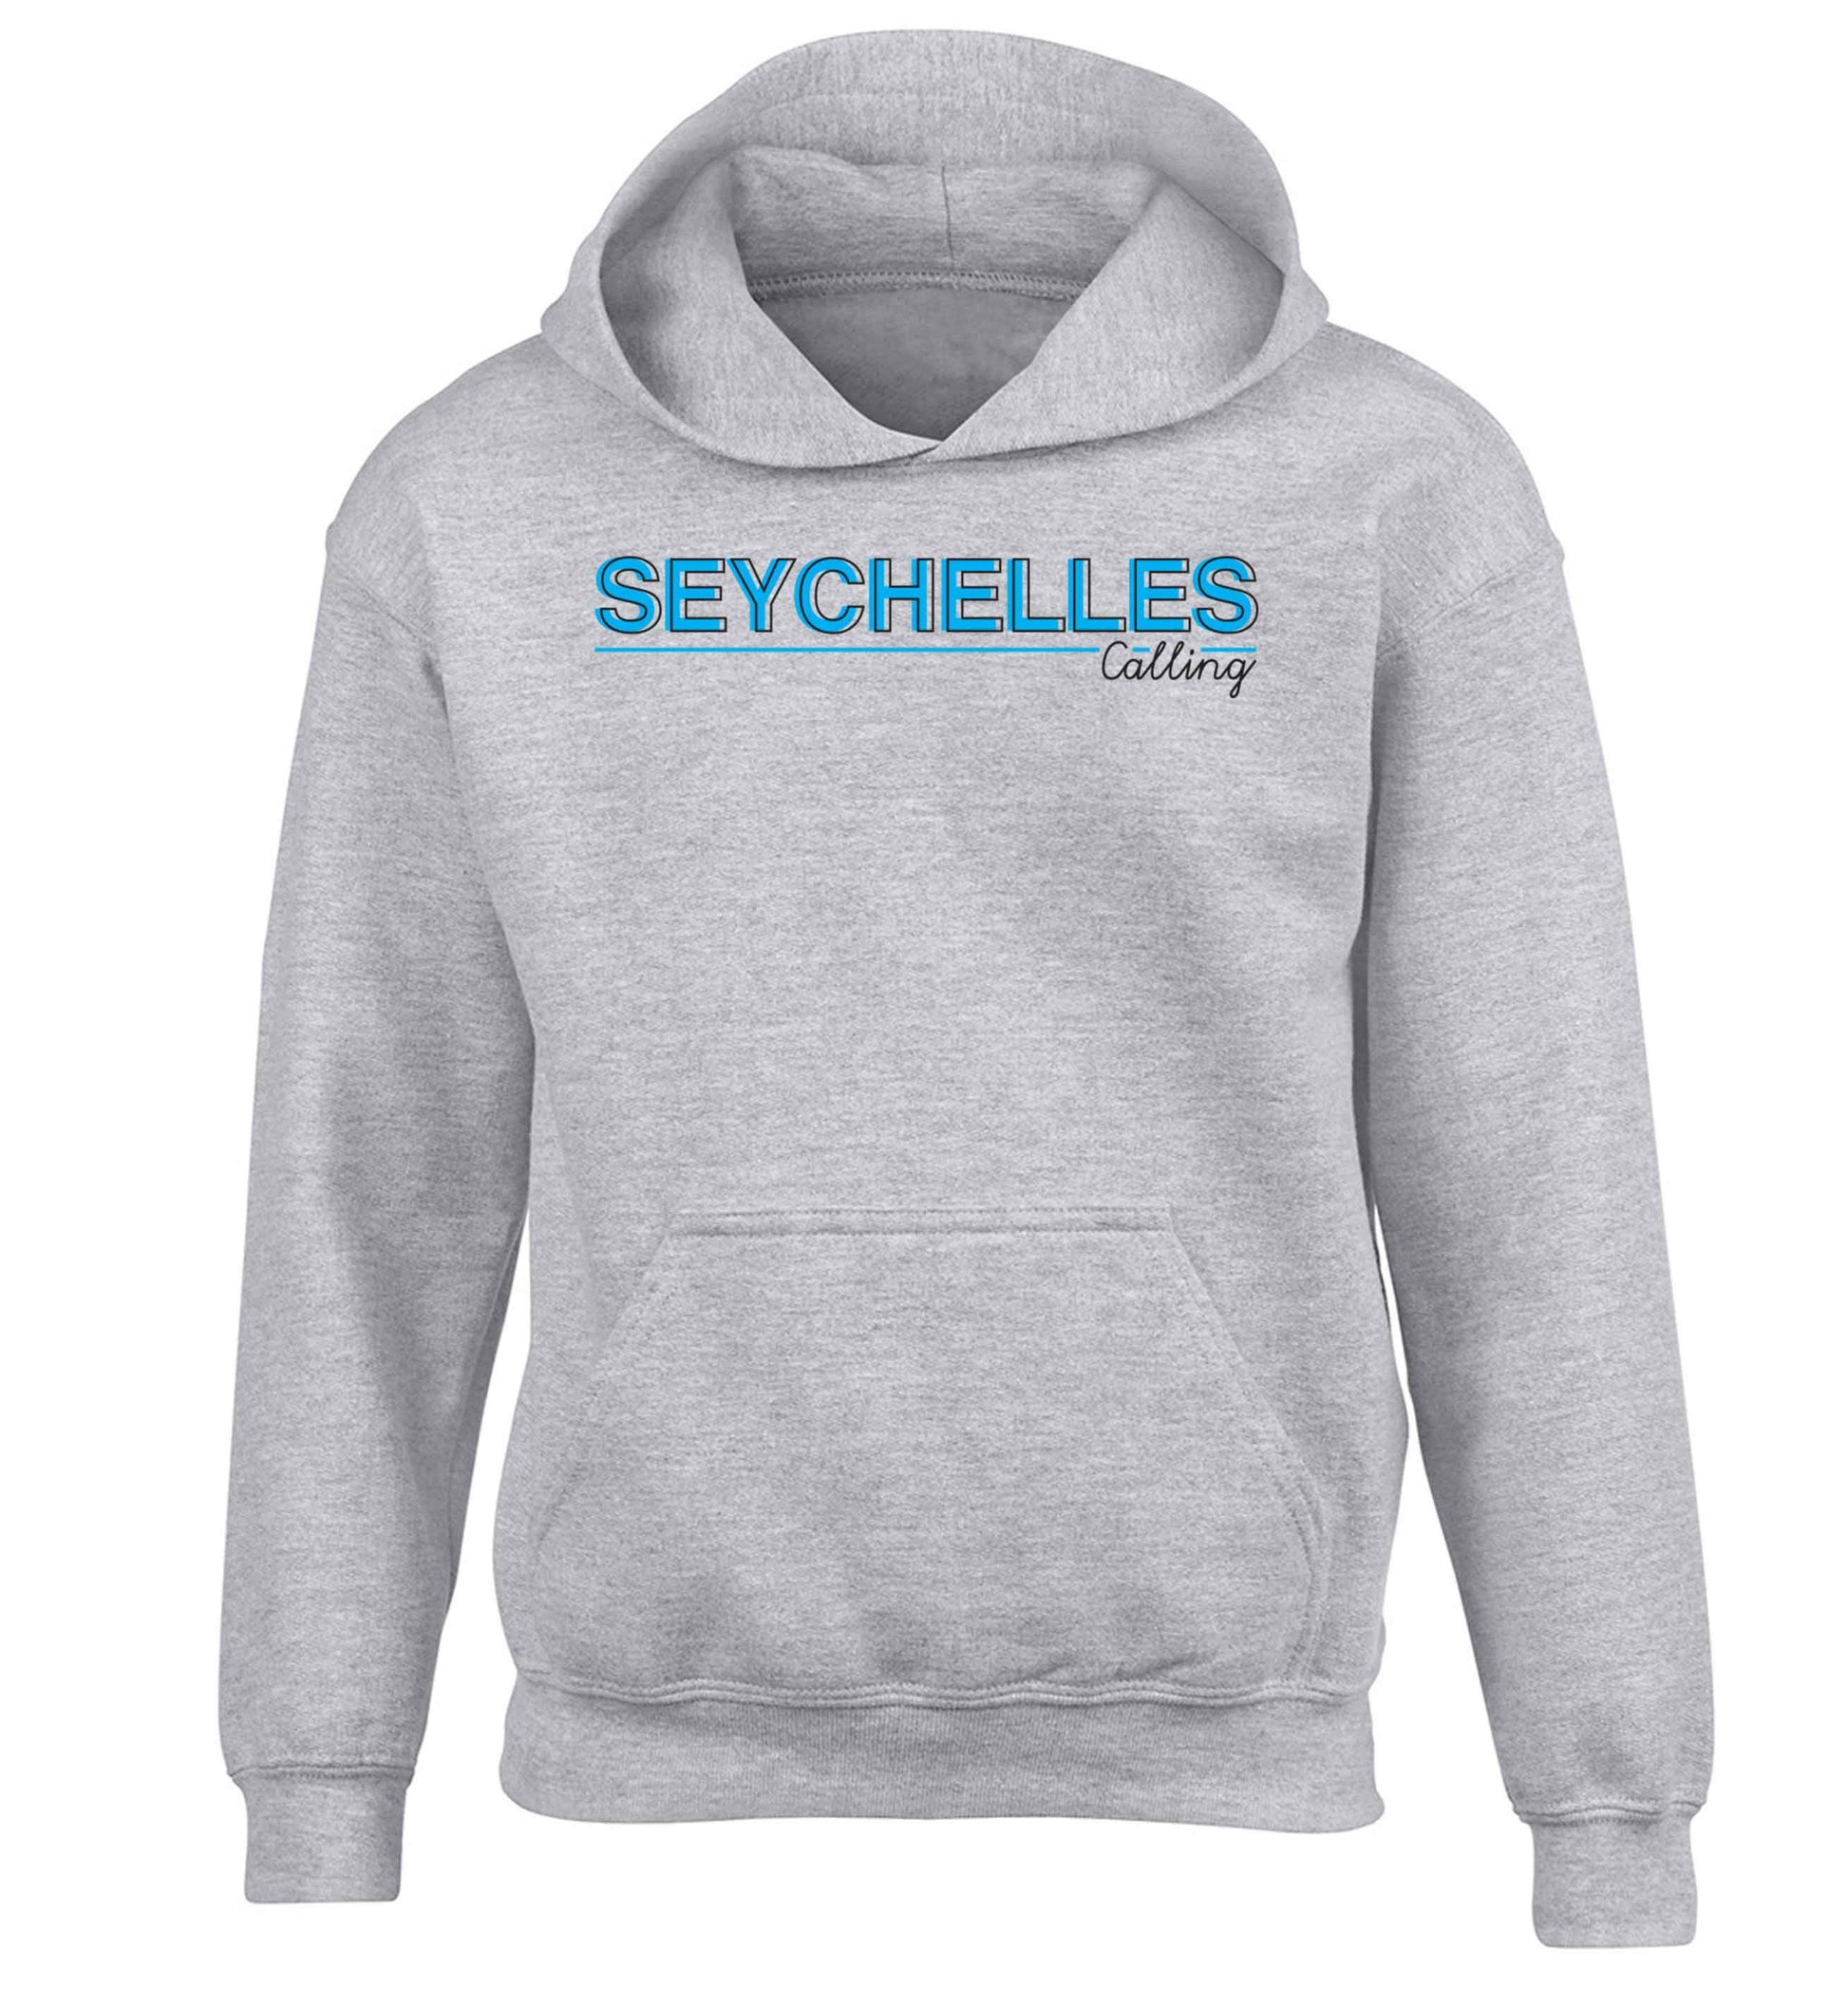 Seychelles calling children's grey hoodie 12-13 Years